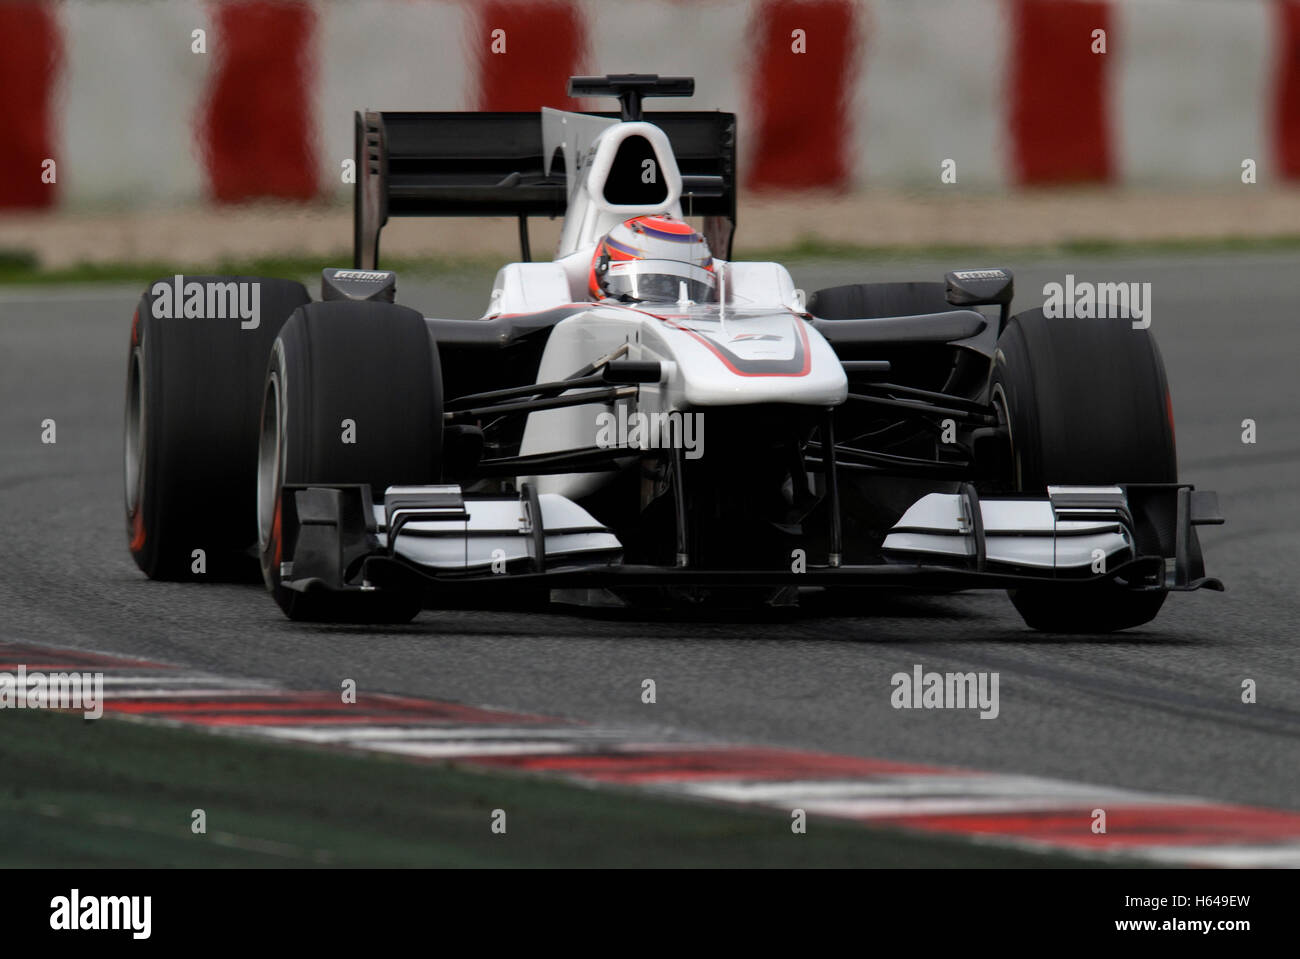 Motorsports, Kamui Kobayashi, JPN, in a BMW Sauber C29 race car, Formula 1 testing at the Circuit de Catalunya race track in Stock Photo